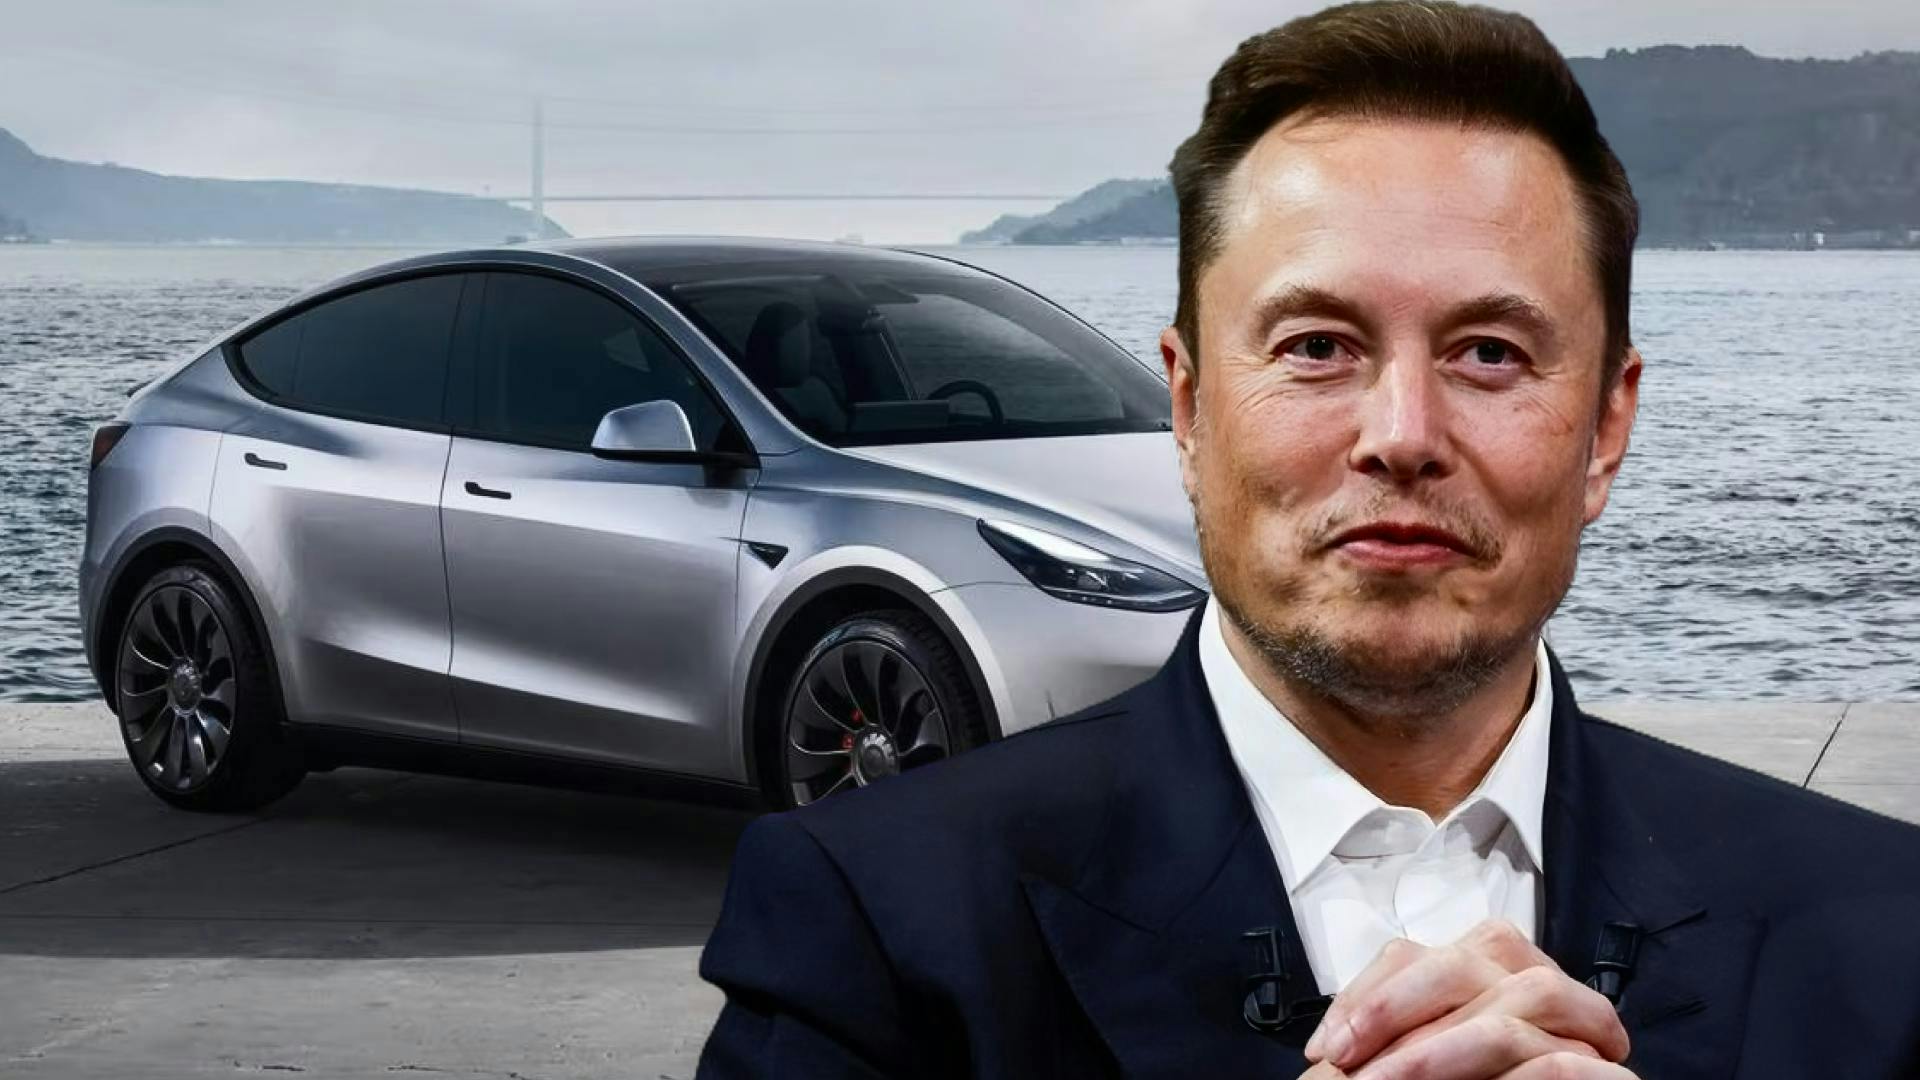 Tesla Announces Major Job Cuts in Texas and California Amid Restructuring